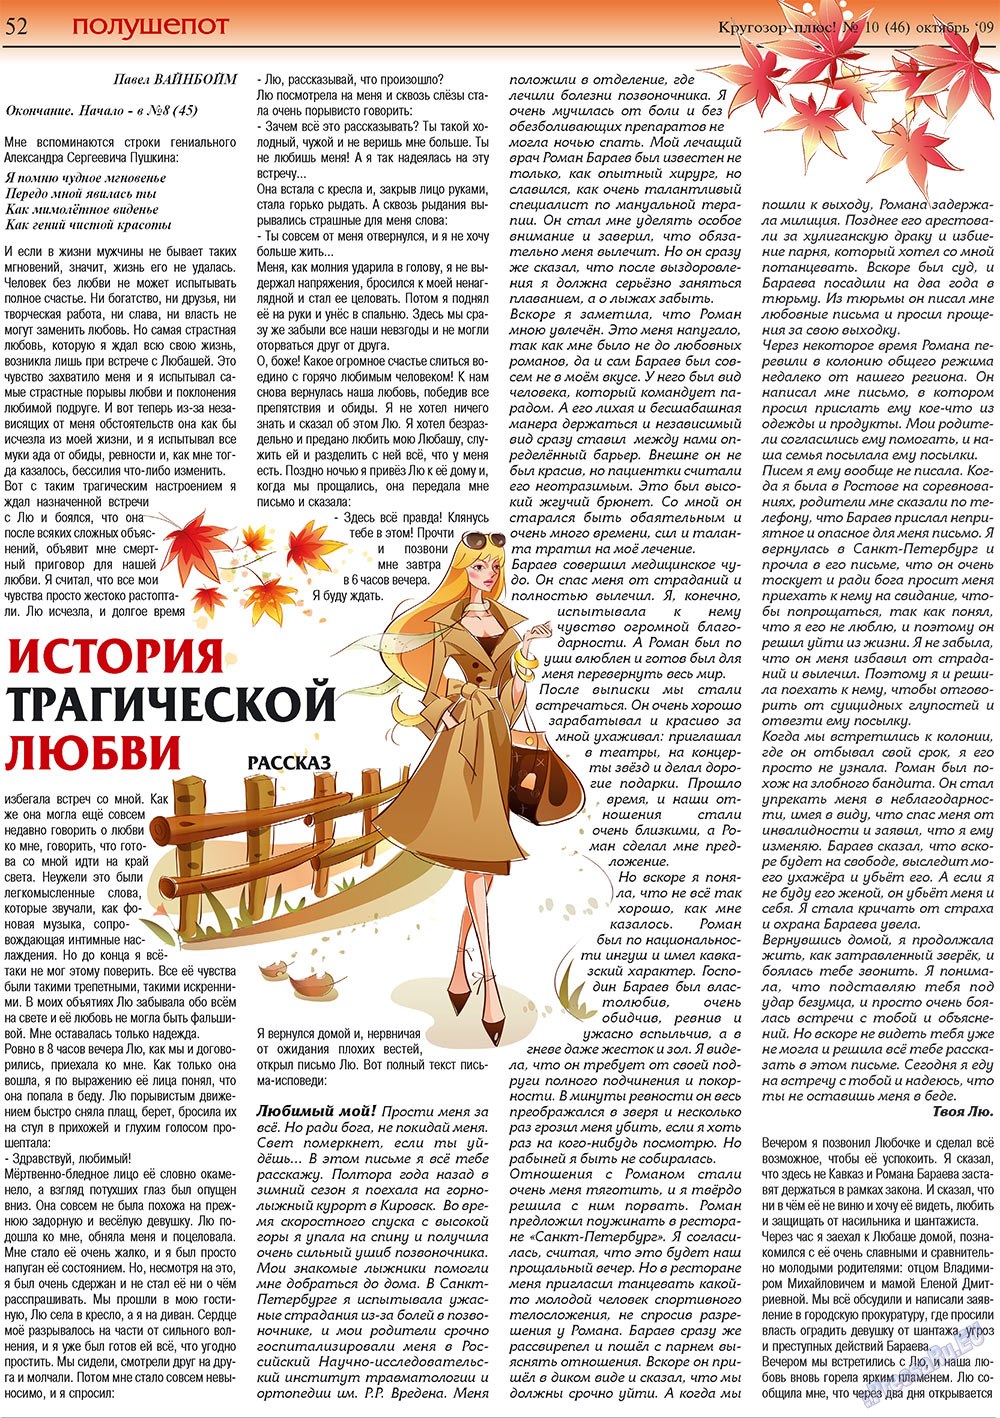 Кругозор плюс! (газета). 2009 год, номер 10, стр. 52